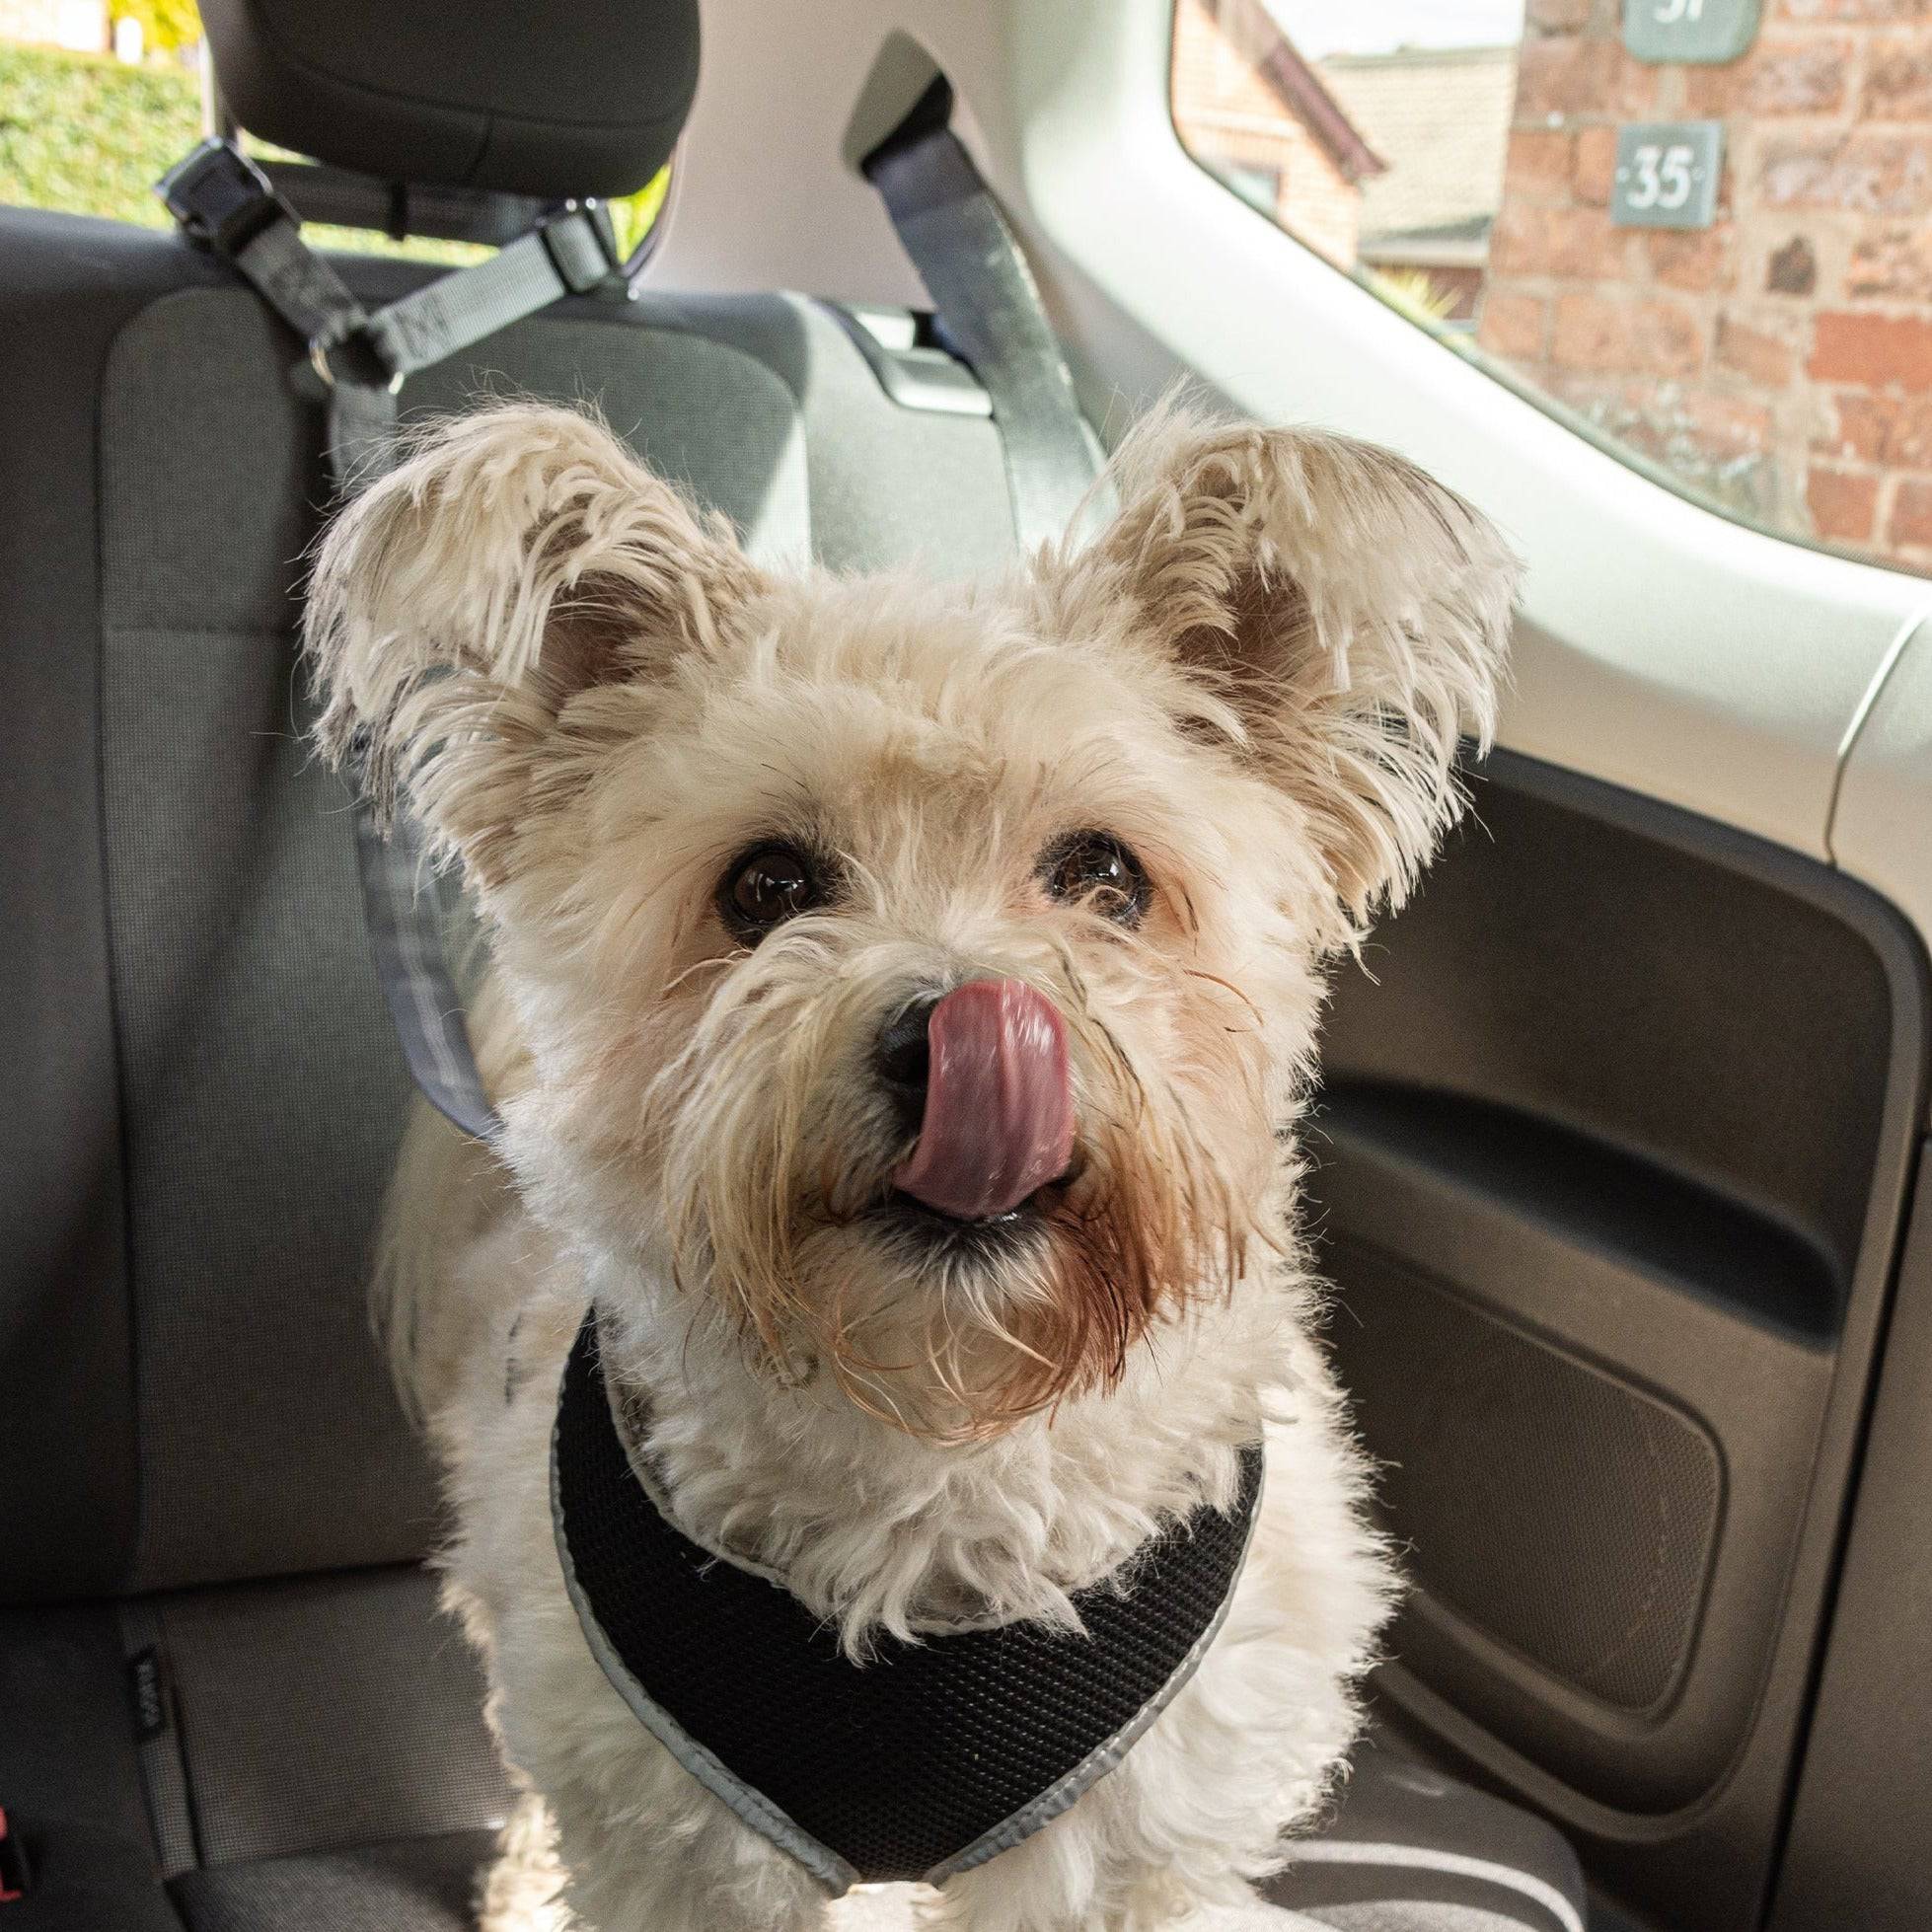 Multi-Purpose Pet Seat Belt - Pawpride - DSL